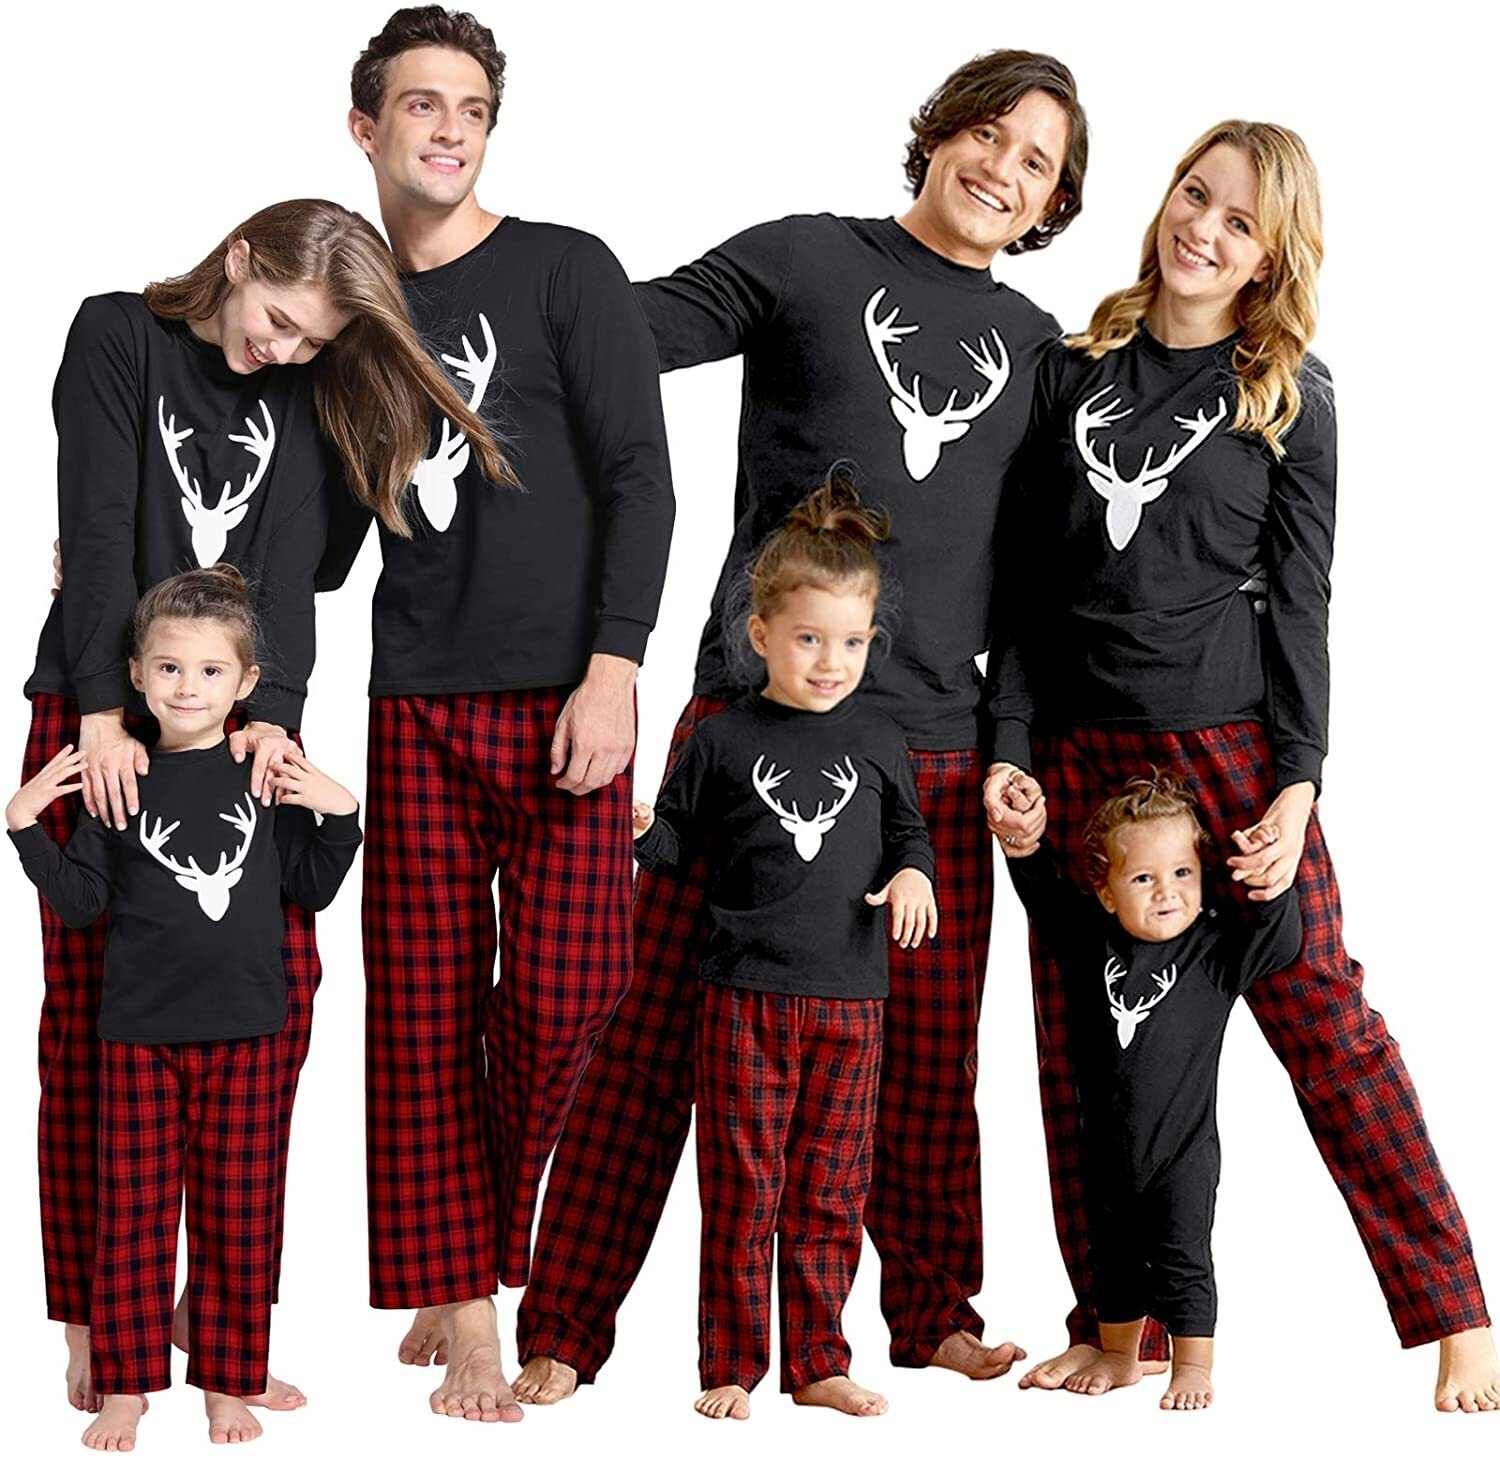 16 Matching Family Christmas Pyjamas You Will Love - Foter